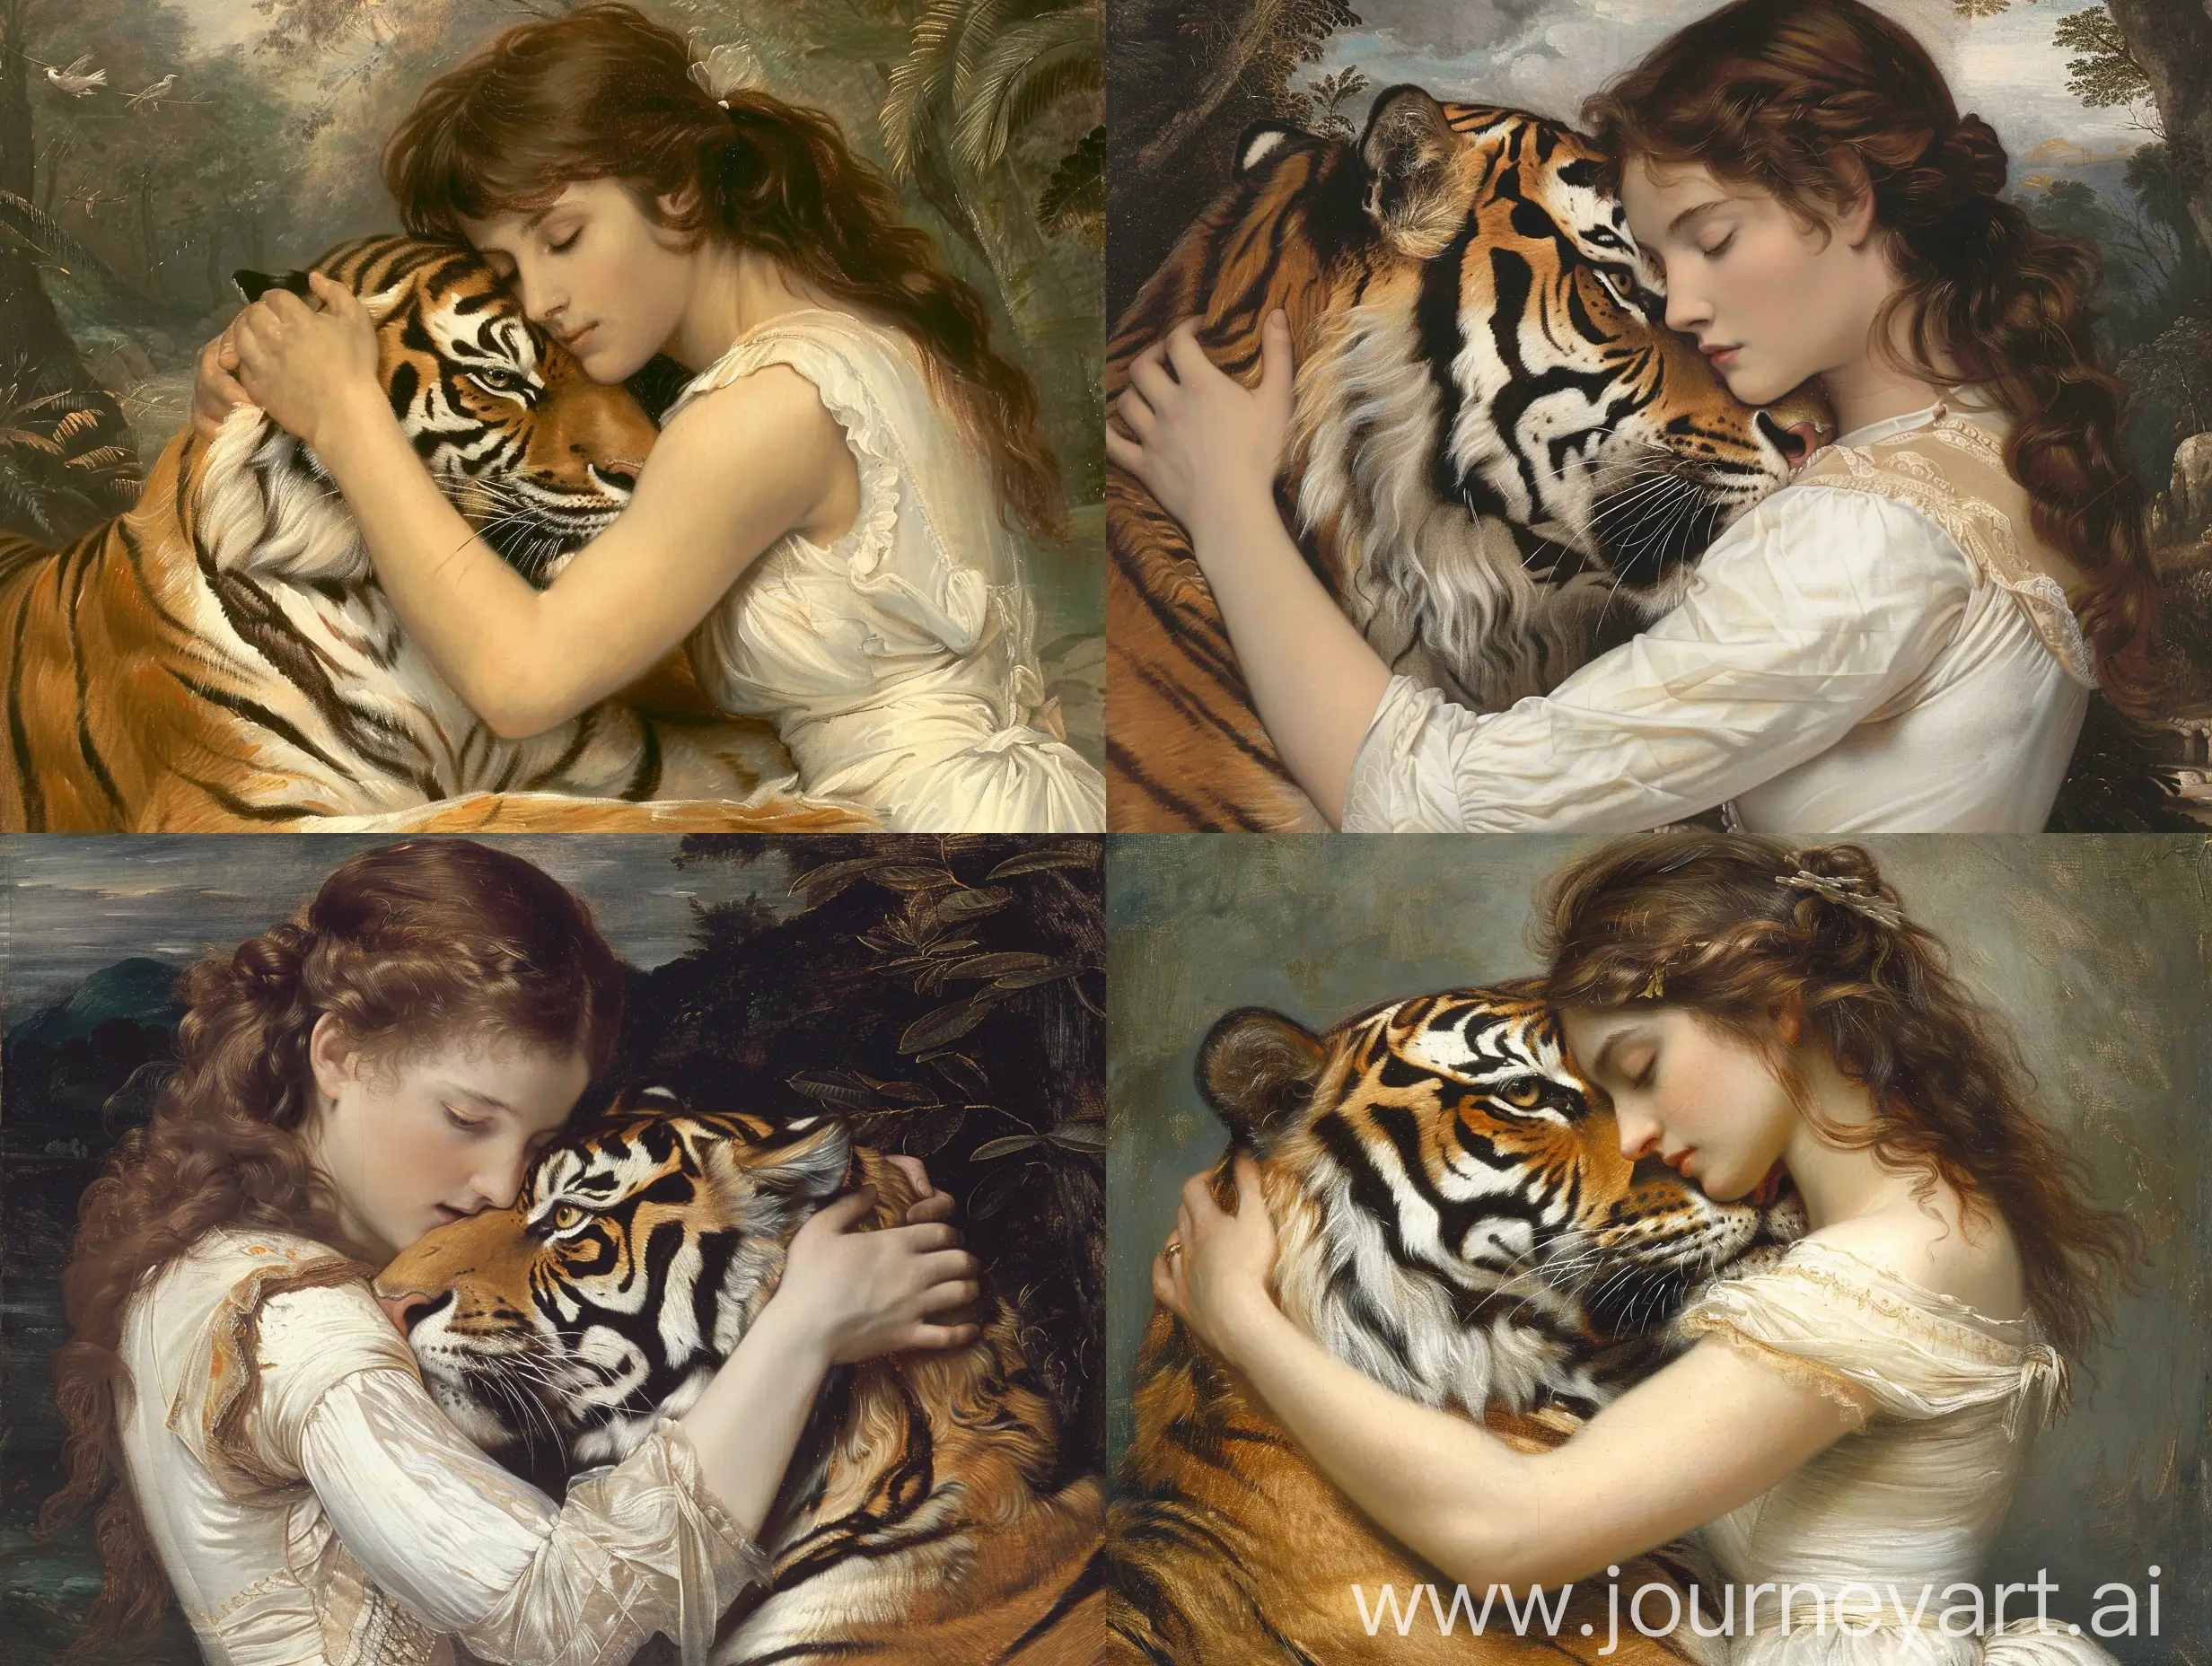 Pre-Raphaelite-Art-Beautiful-Woman-in-White-Dress-Embracing-a-Tiger